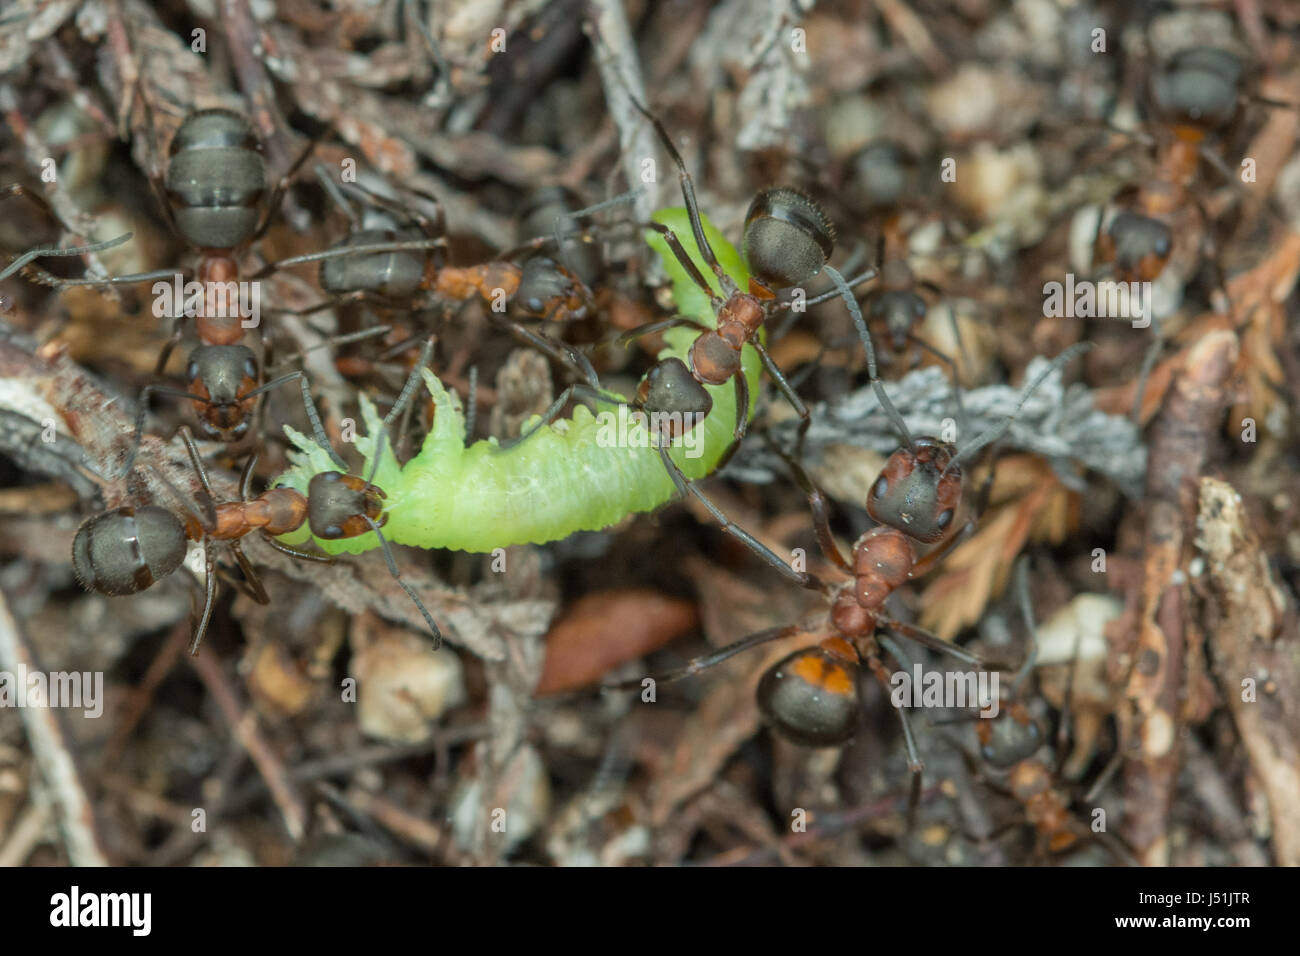 Close-up de madera hormigas (Formica rufa) llevando green caterpillar para anidar Foto de stock